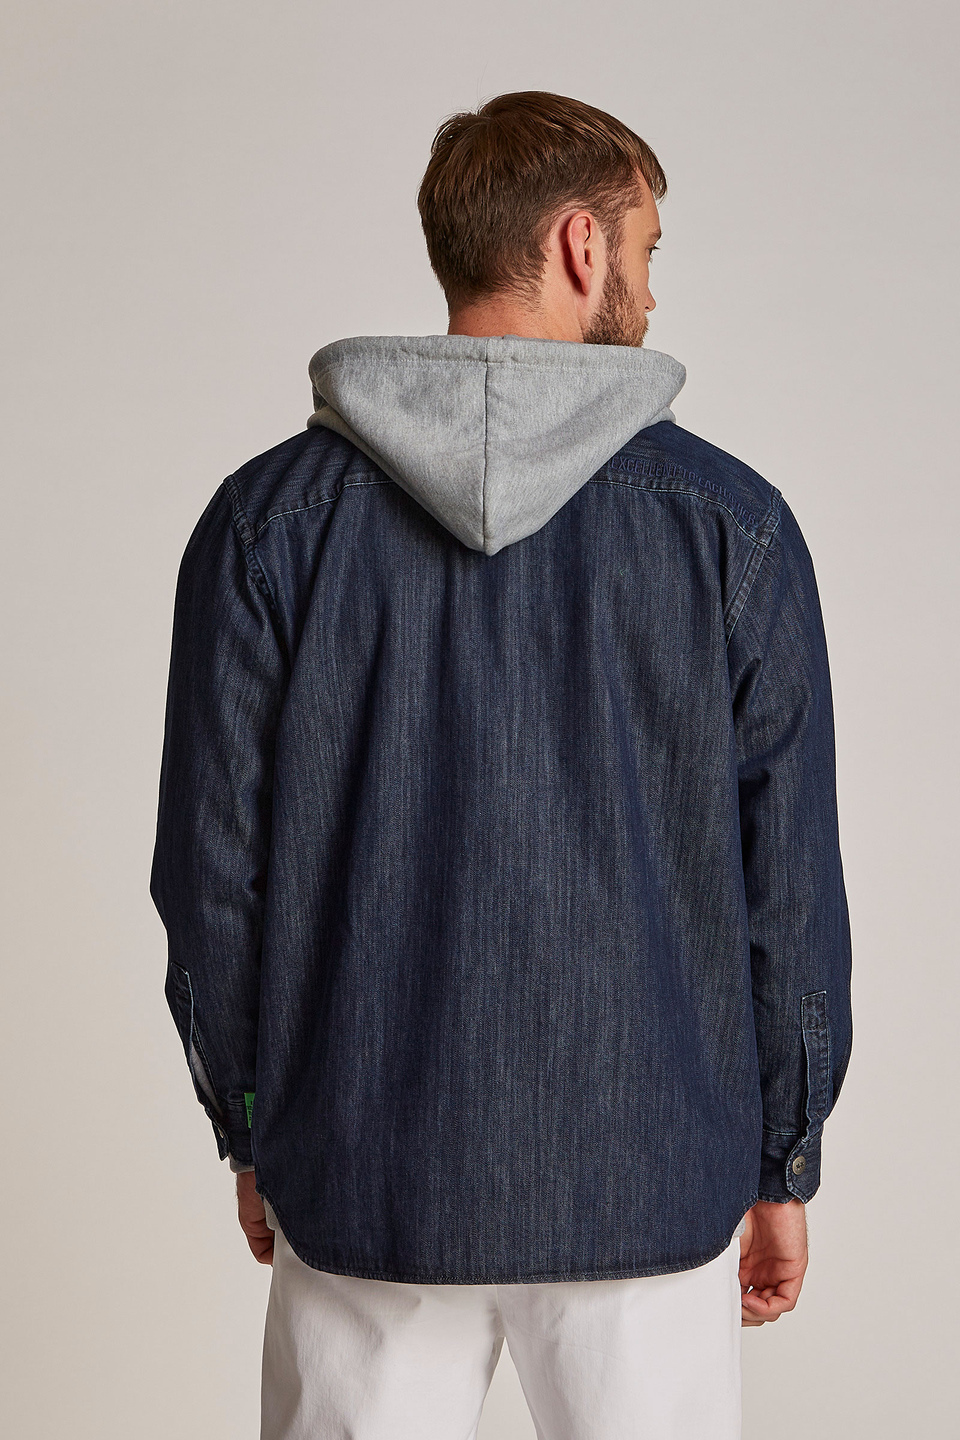 Chaqueta de hombre de algodón 100 % con capucha, modelo oversize - La Martina - Official Online Shop